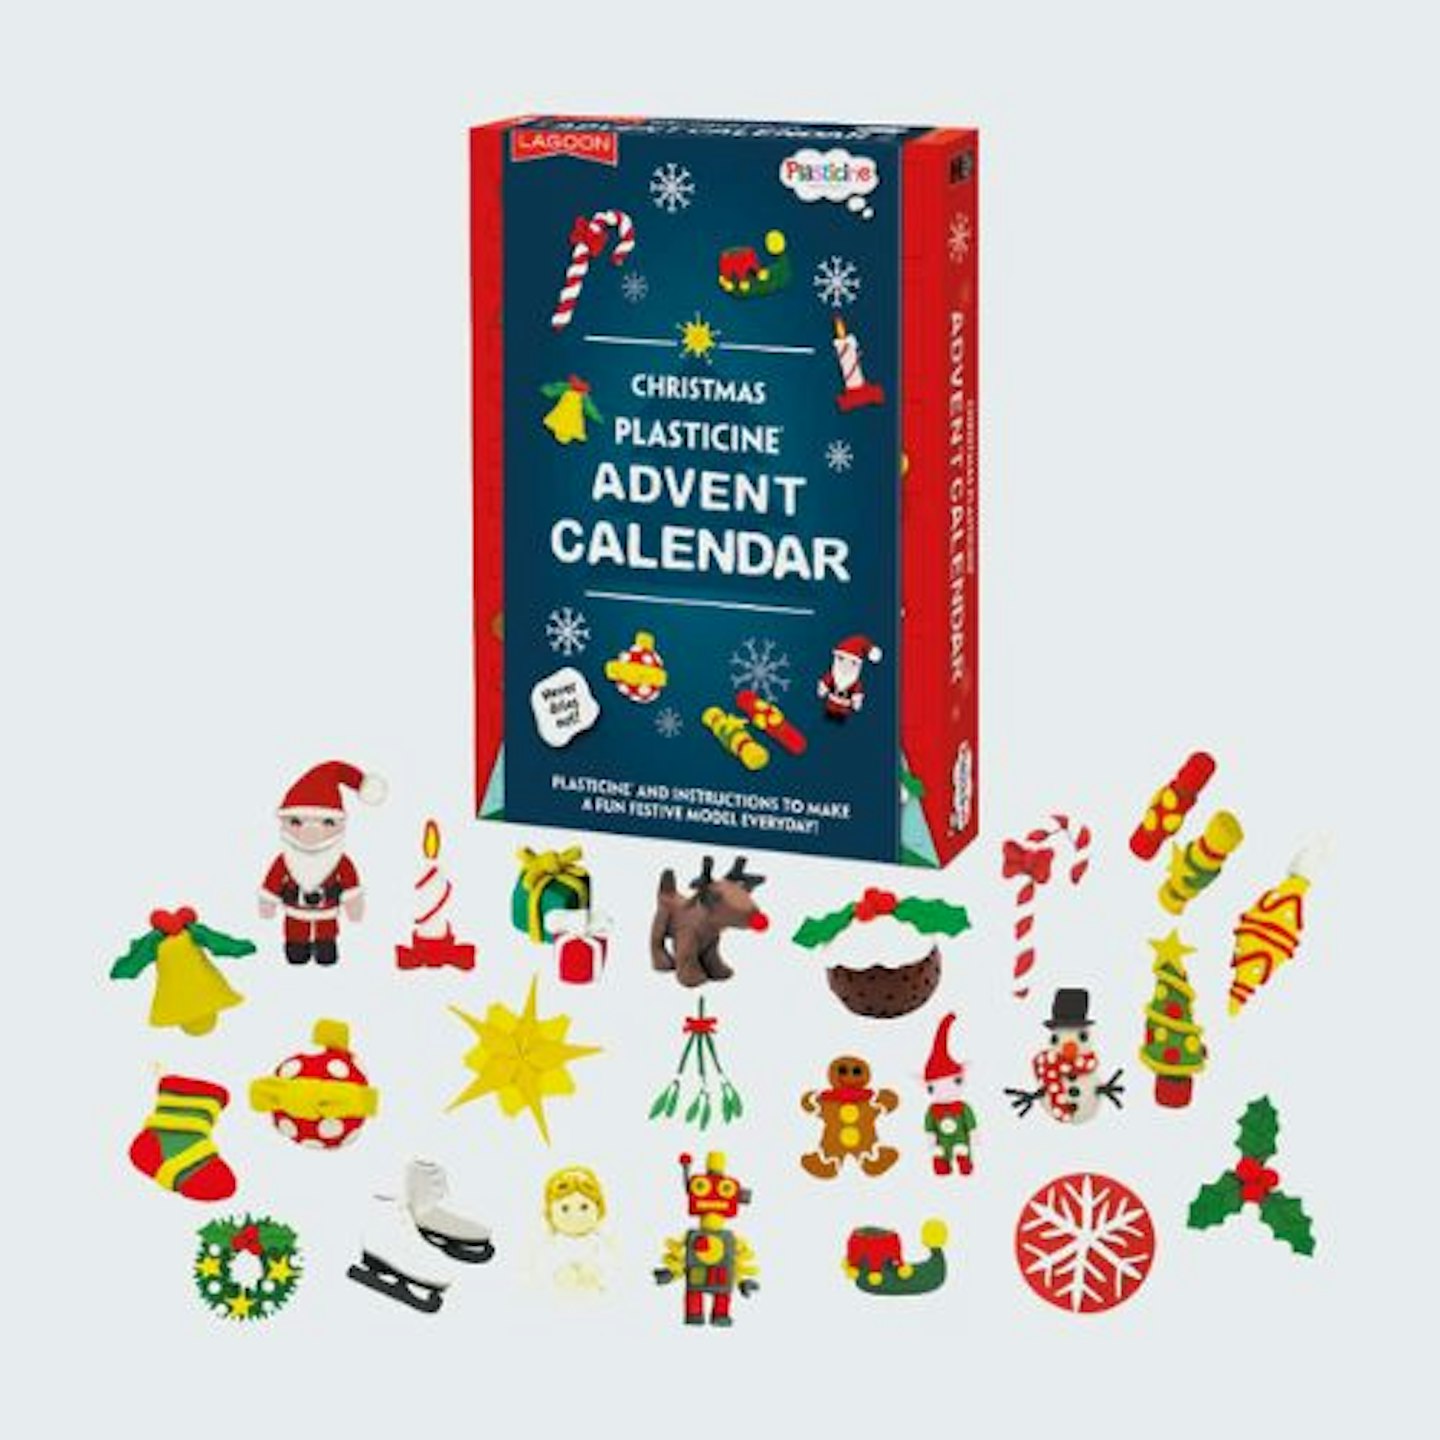 Best Advent calendars for toddlers Christmas Plasticine Advent Calendar